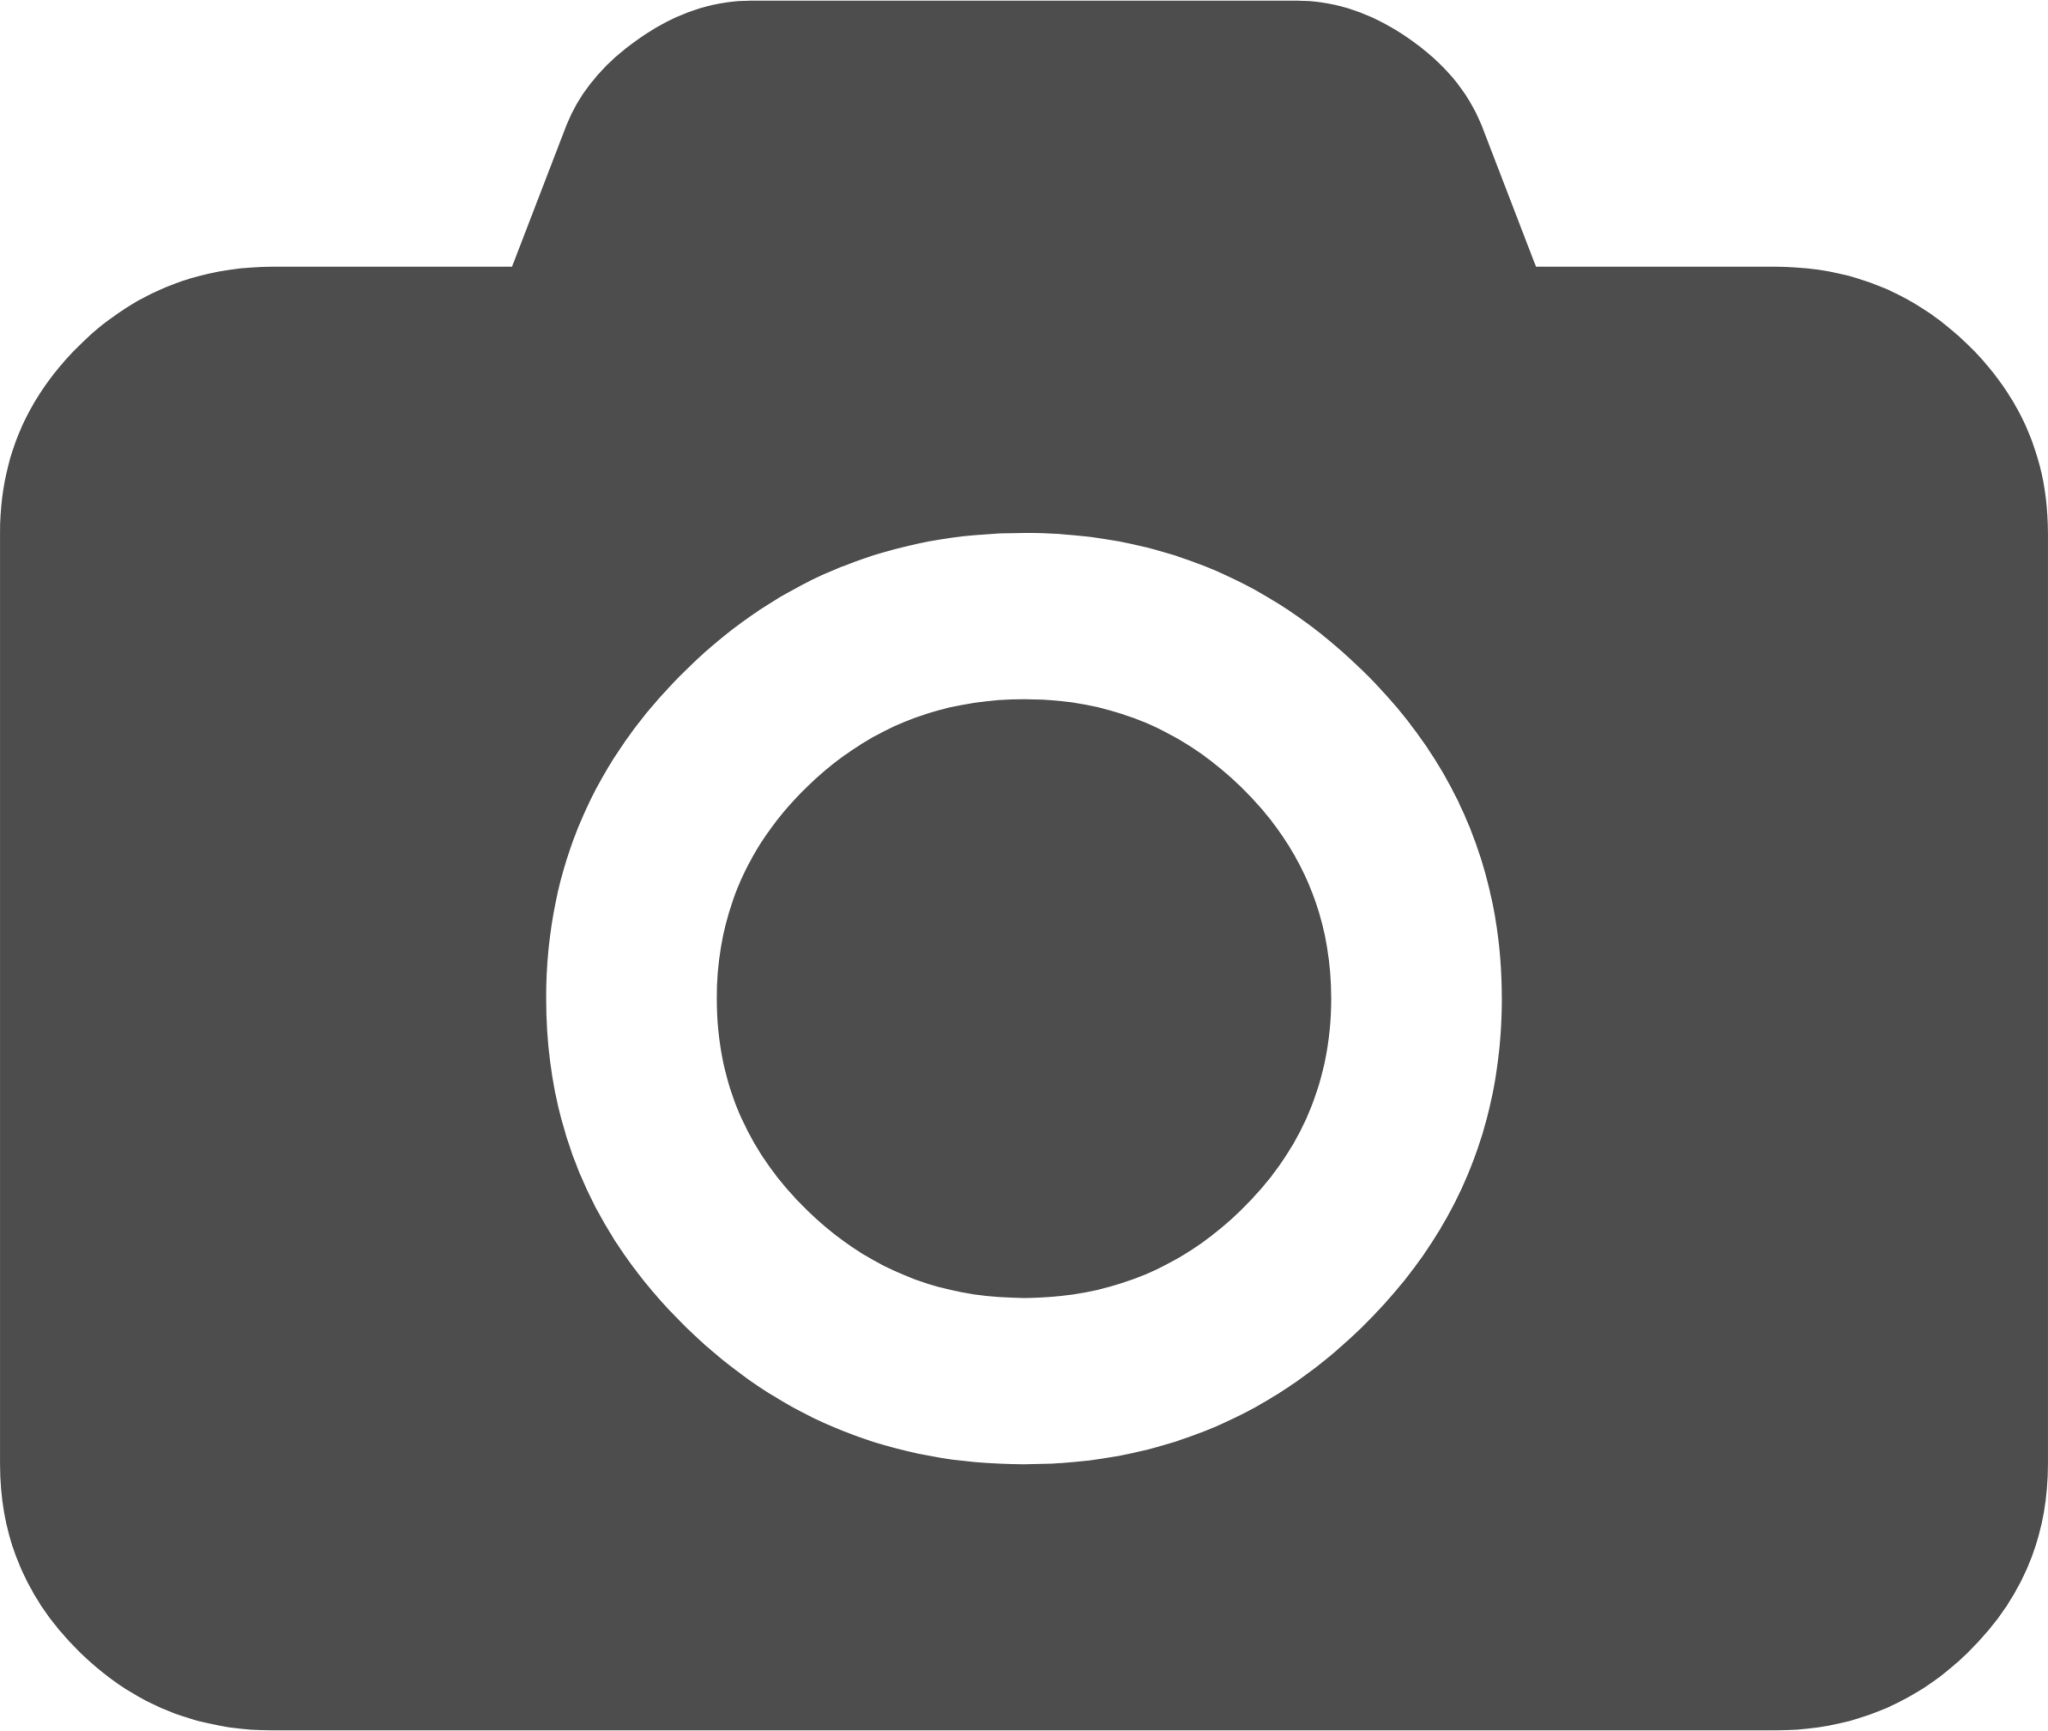 folder camera icon